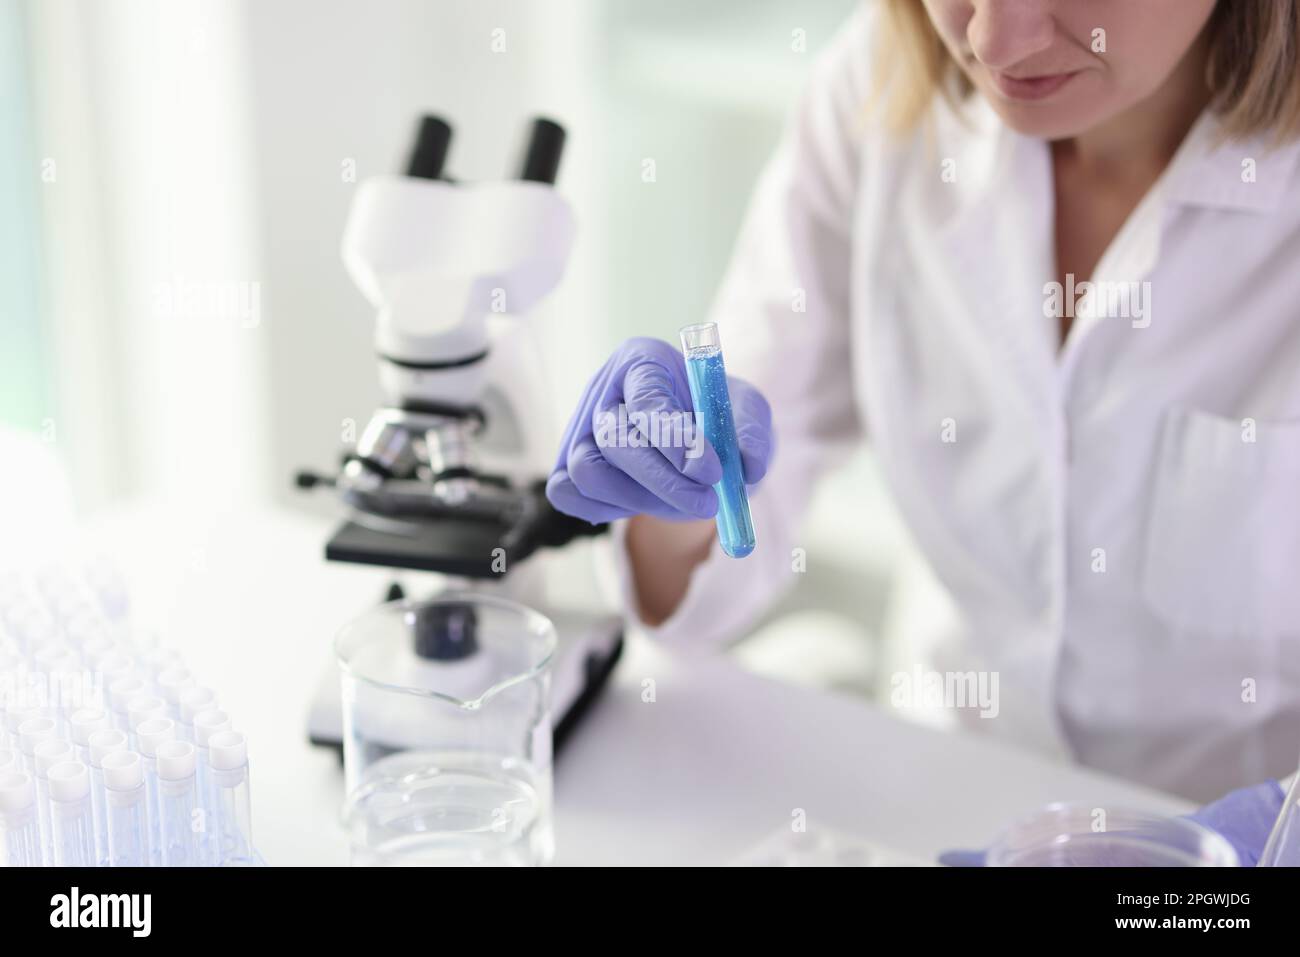 Female worker examines sample in test tube using microscope Stock Photo